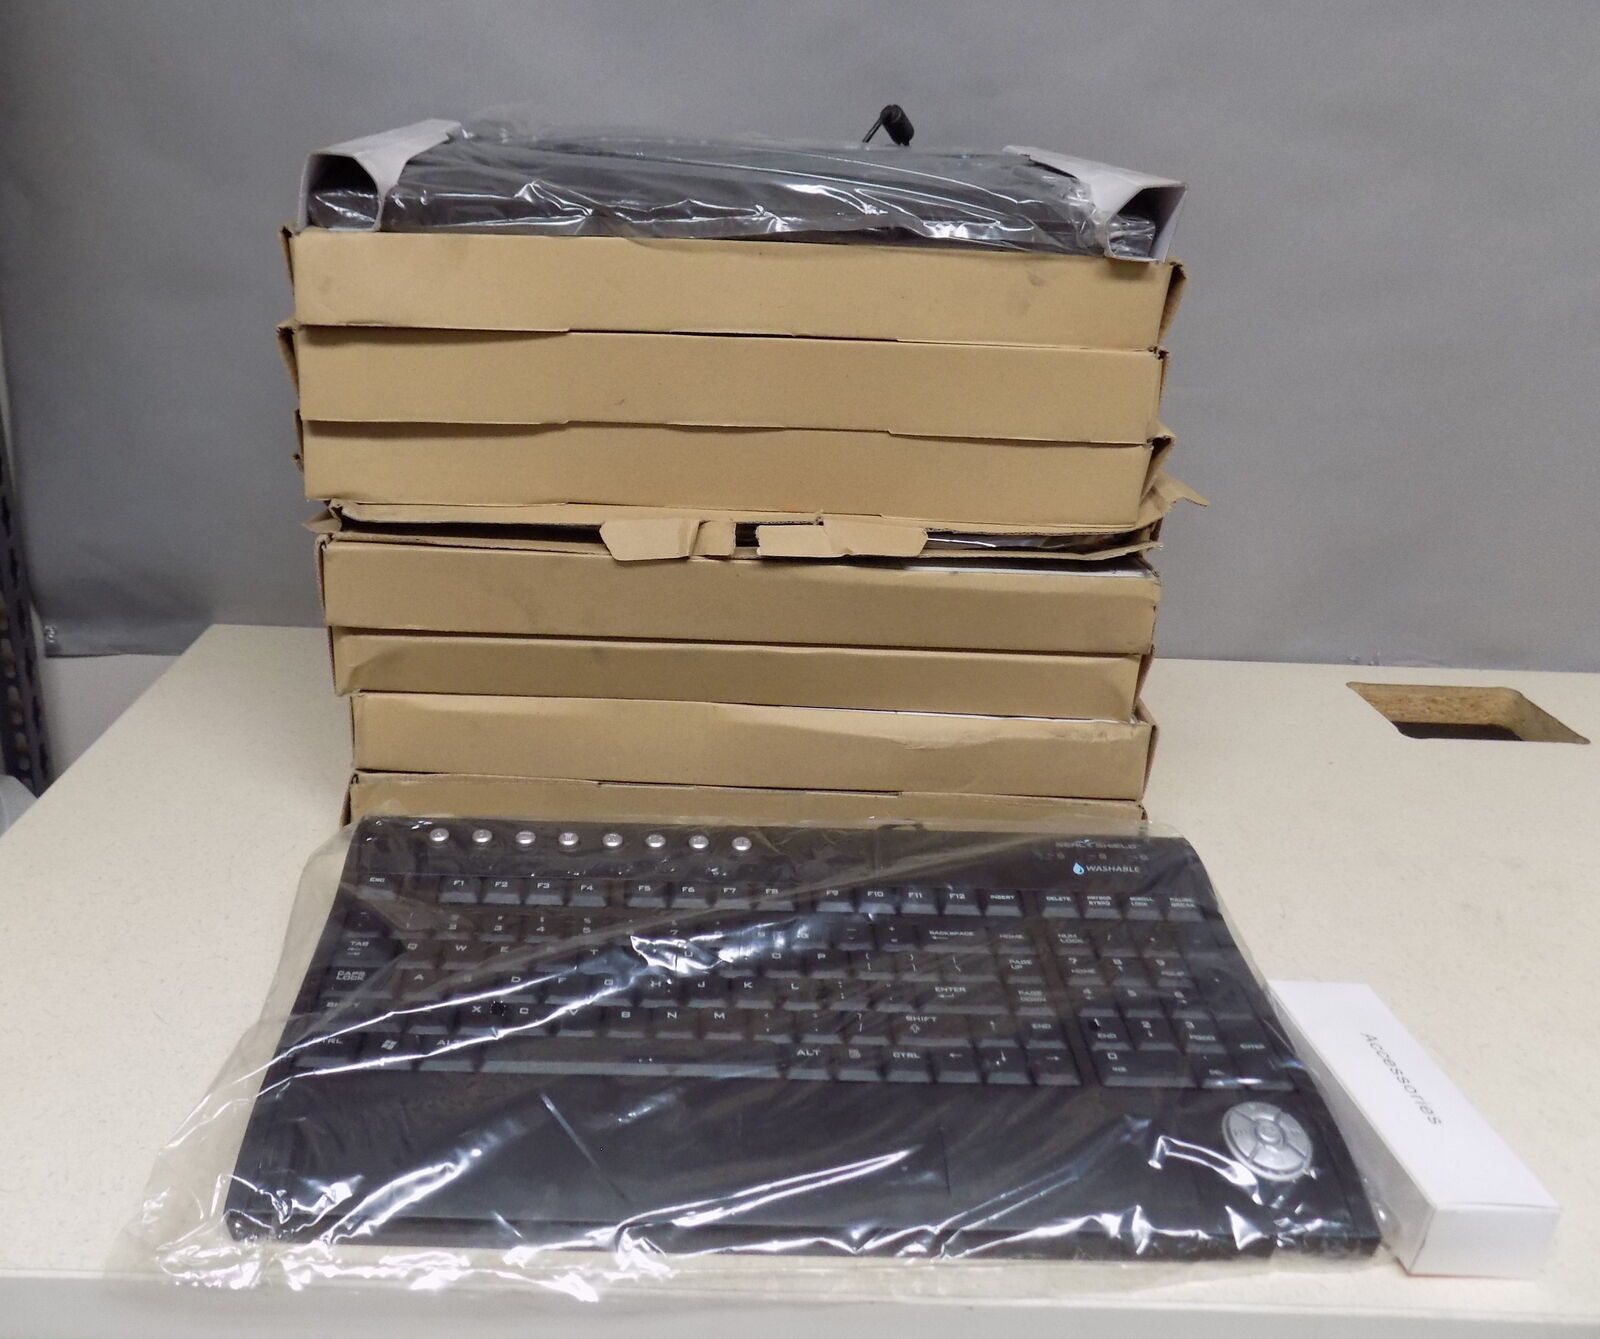 Lot of 10 - Seal Shield Silver Surf Multimedia Keyboard (USA) Model# 103 